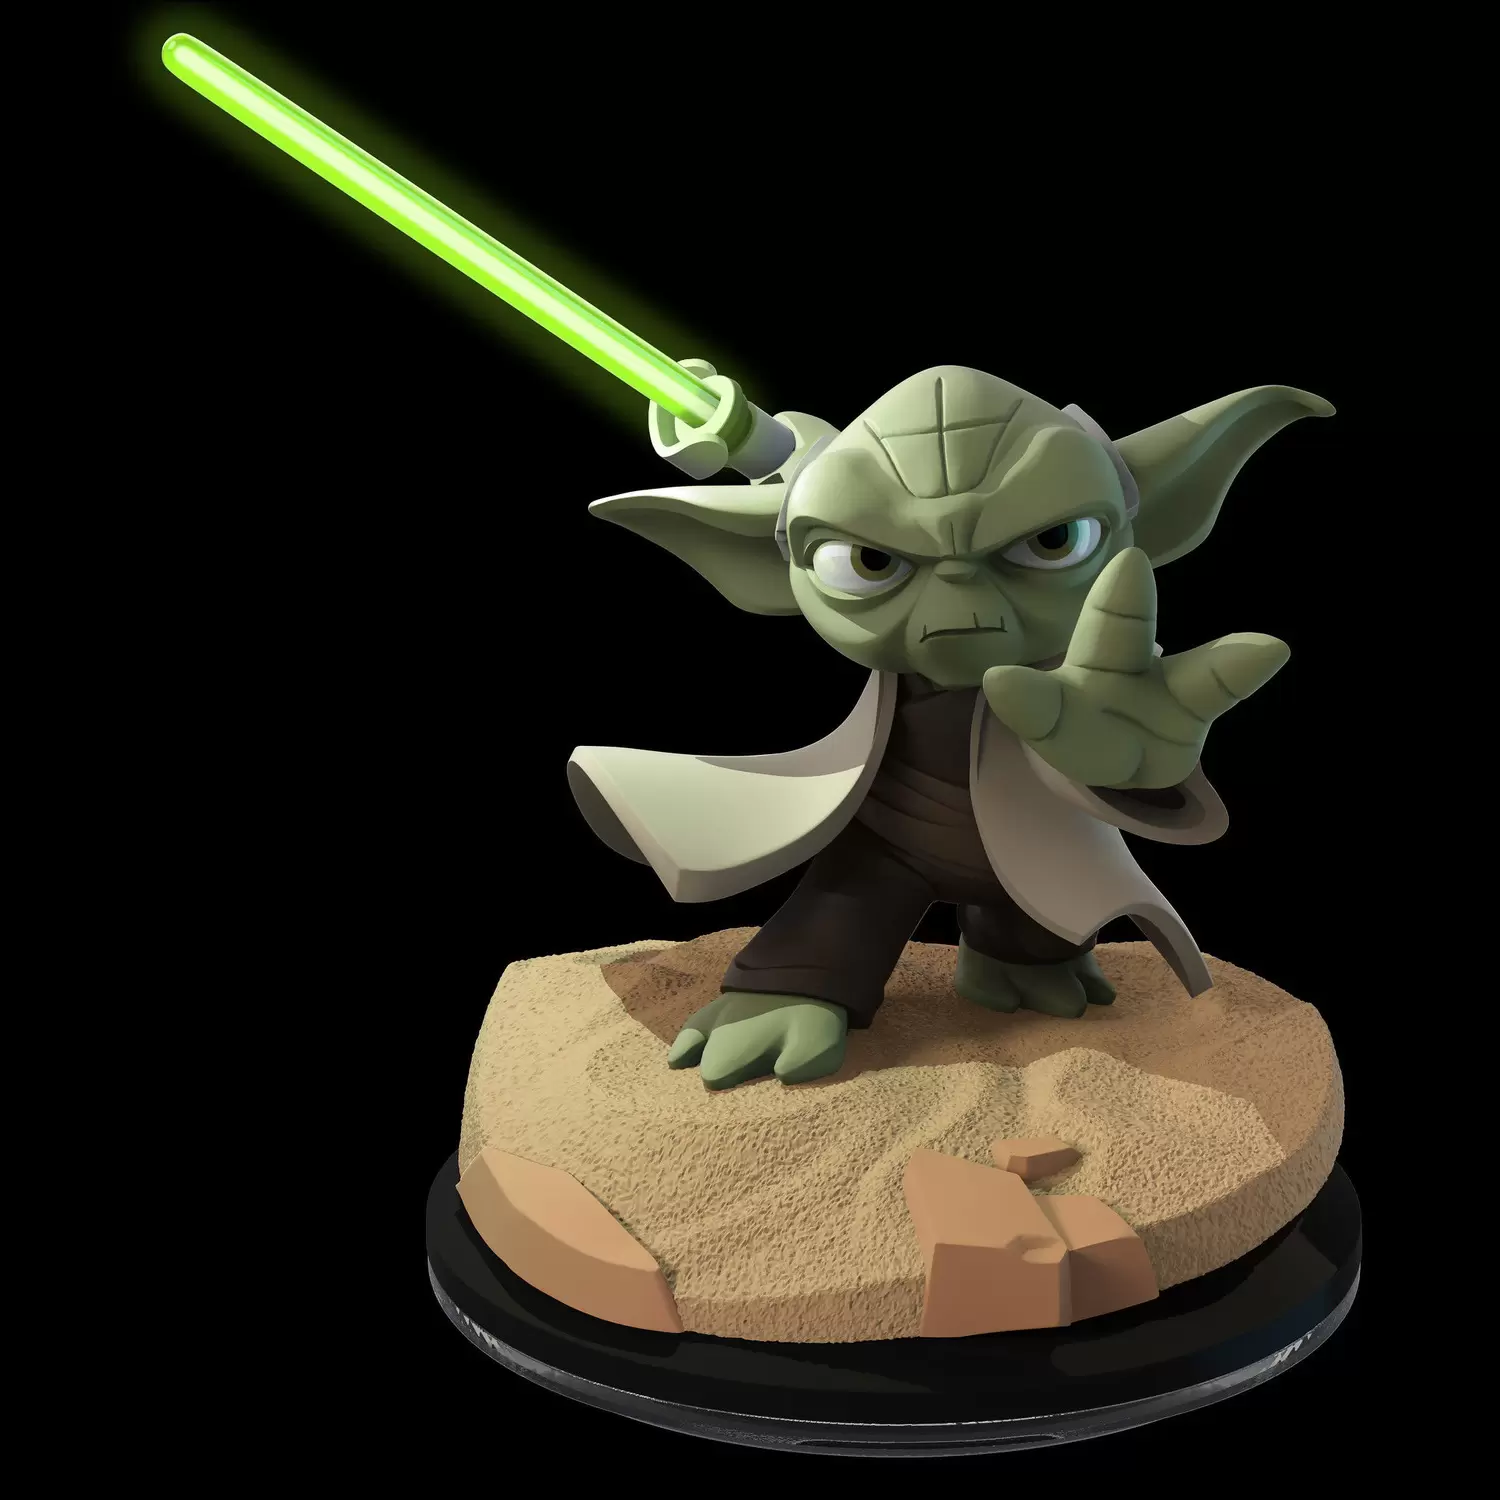 Disney Infinity Action figures - Light FX Yoda